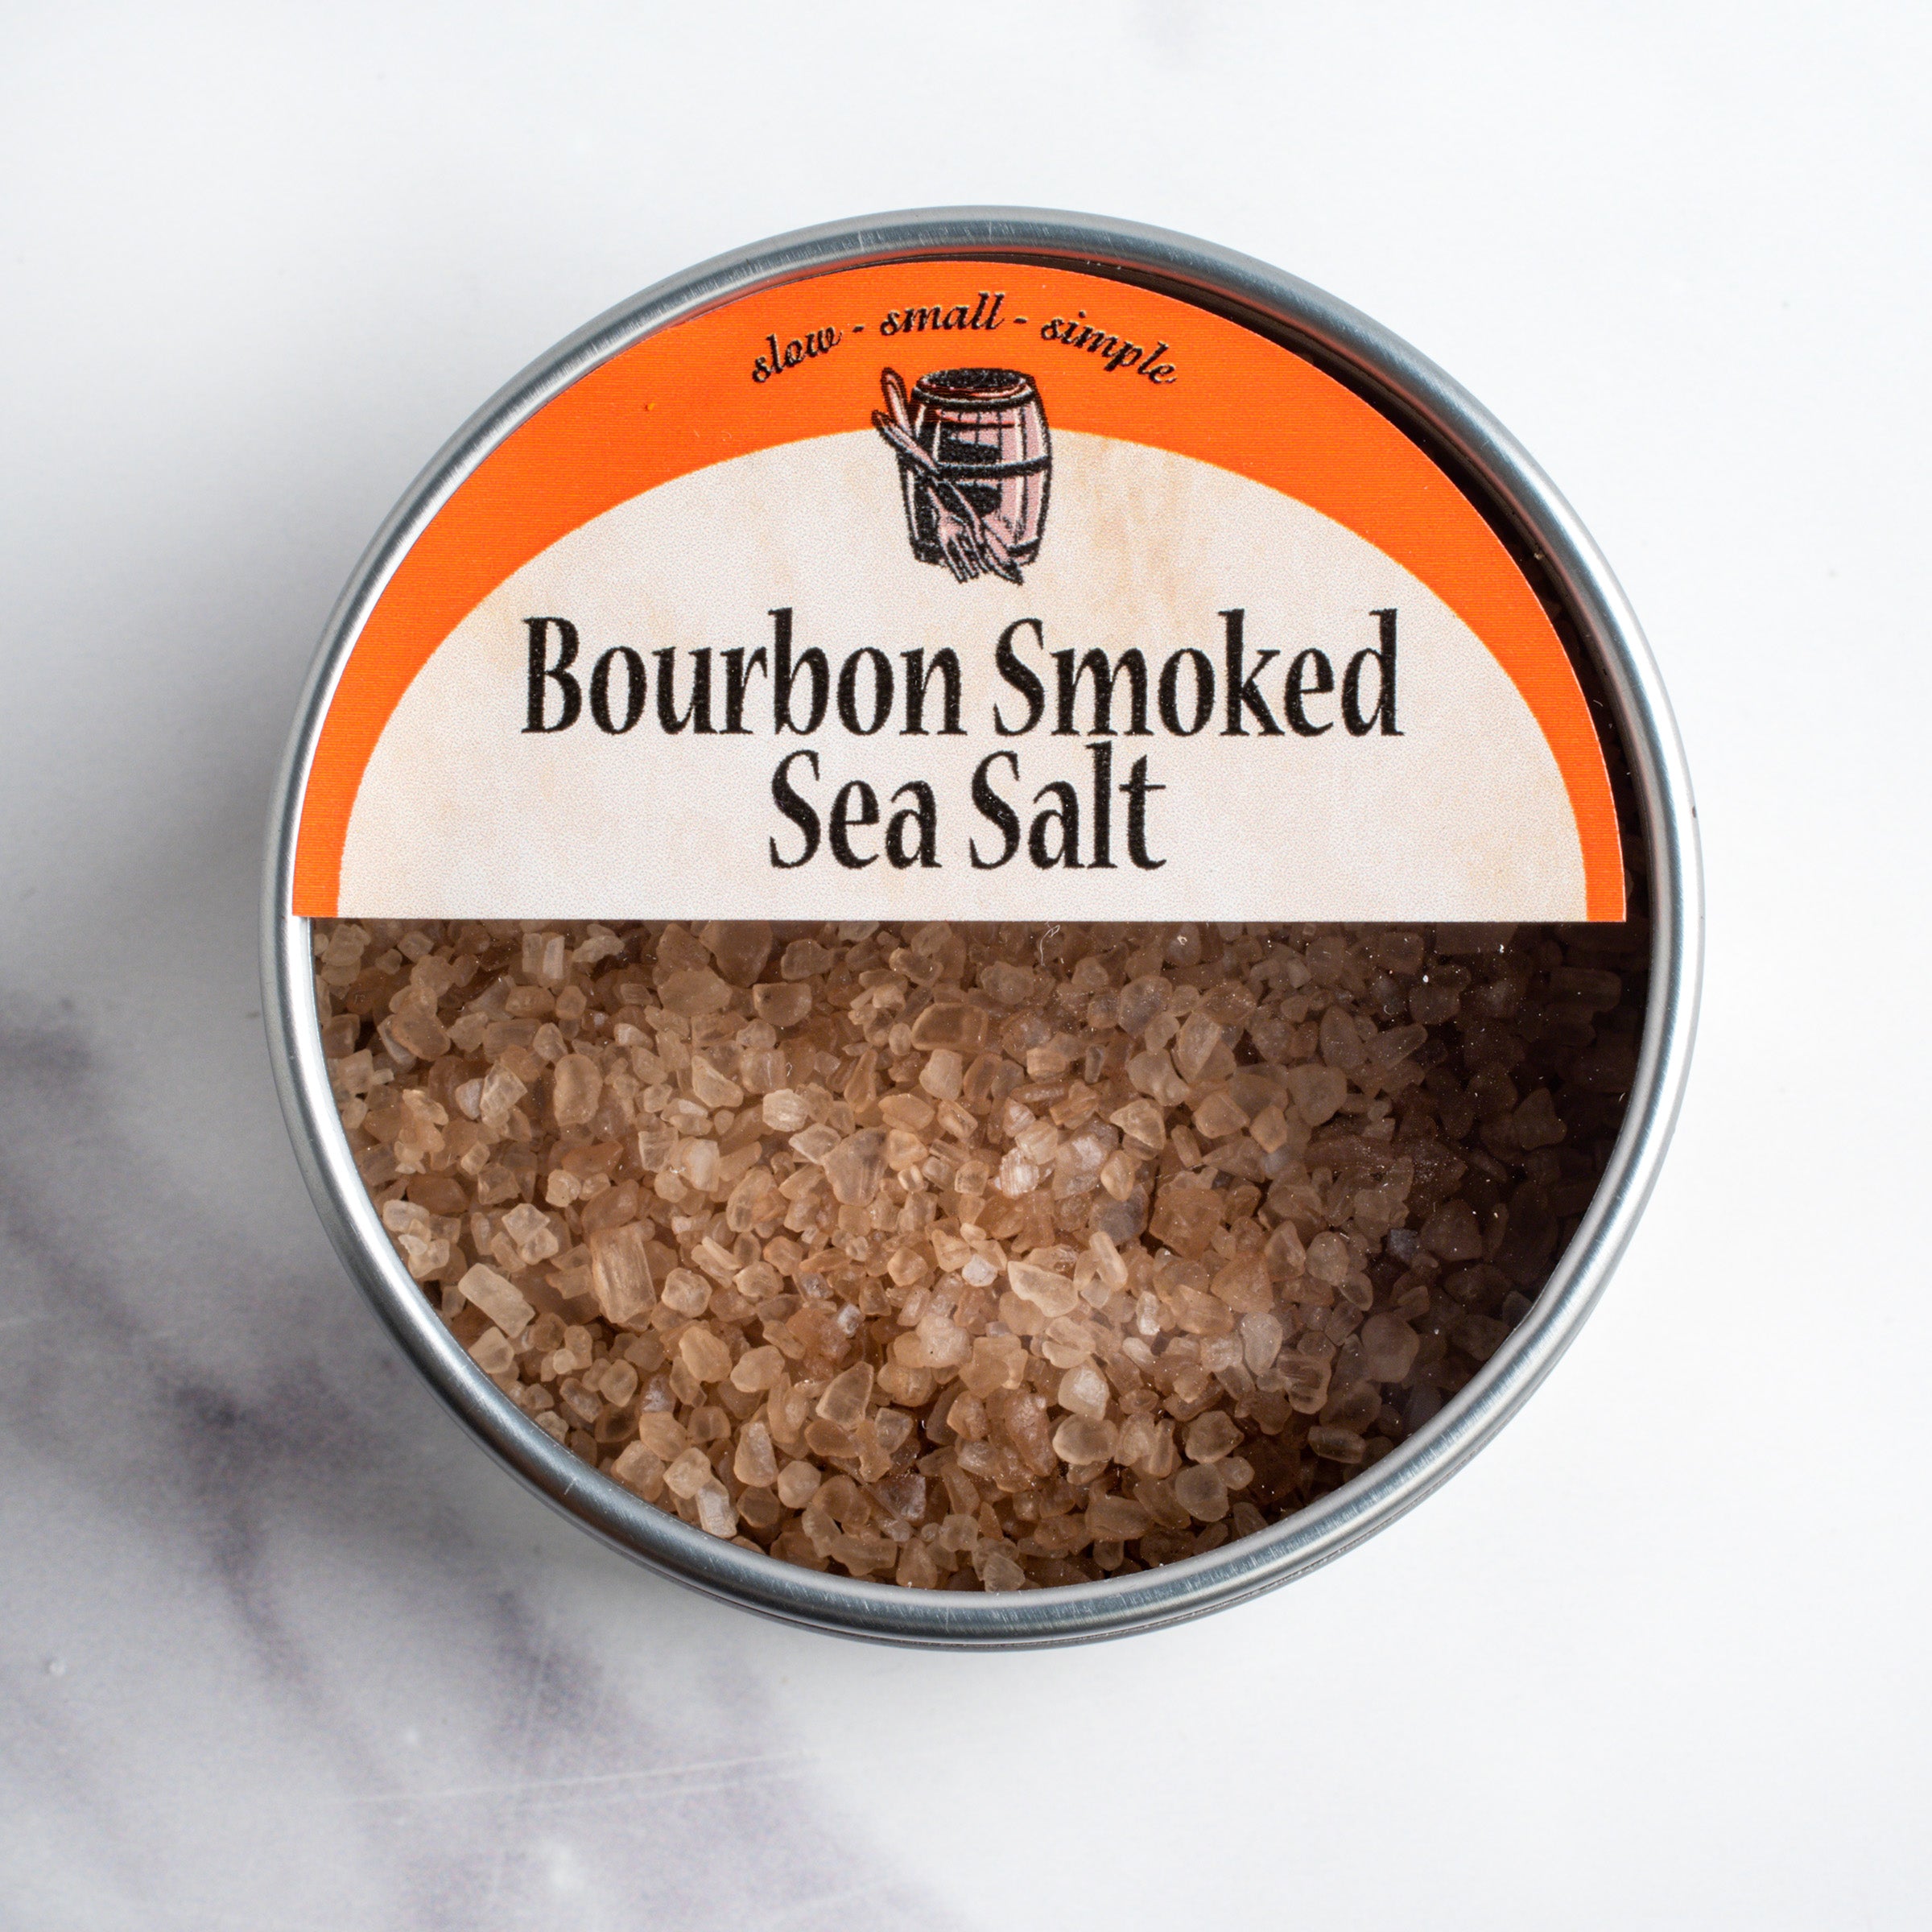 Spices Barrel/Rubs, Smoked Salt/Bourbon igourmet Sea Bourbon – & Seasonings